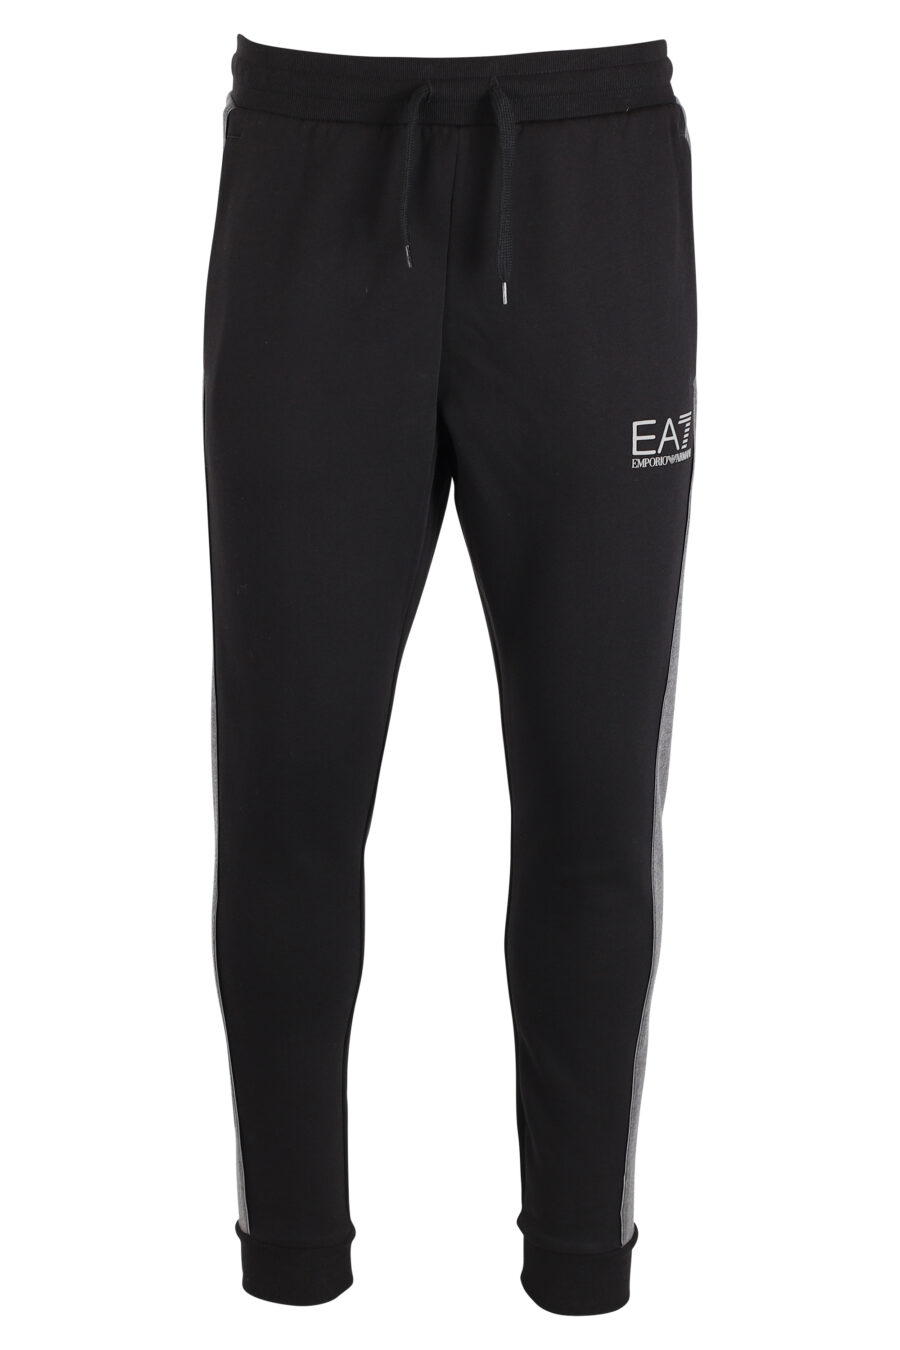 Pantalón de chándal negro con franjas grises y logo lateral "lux identity" - IMG 4105